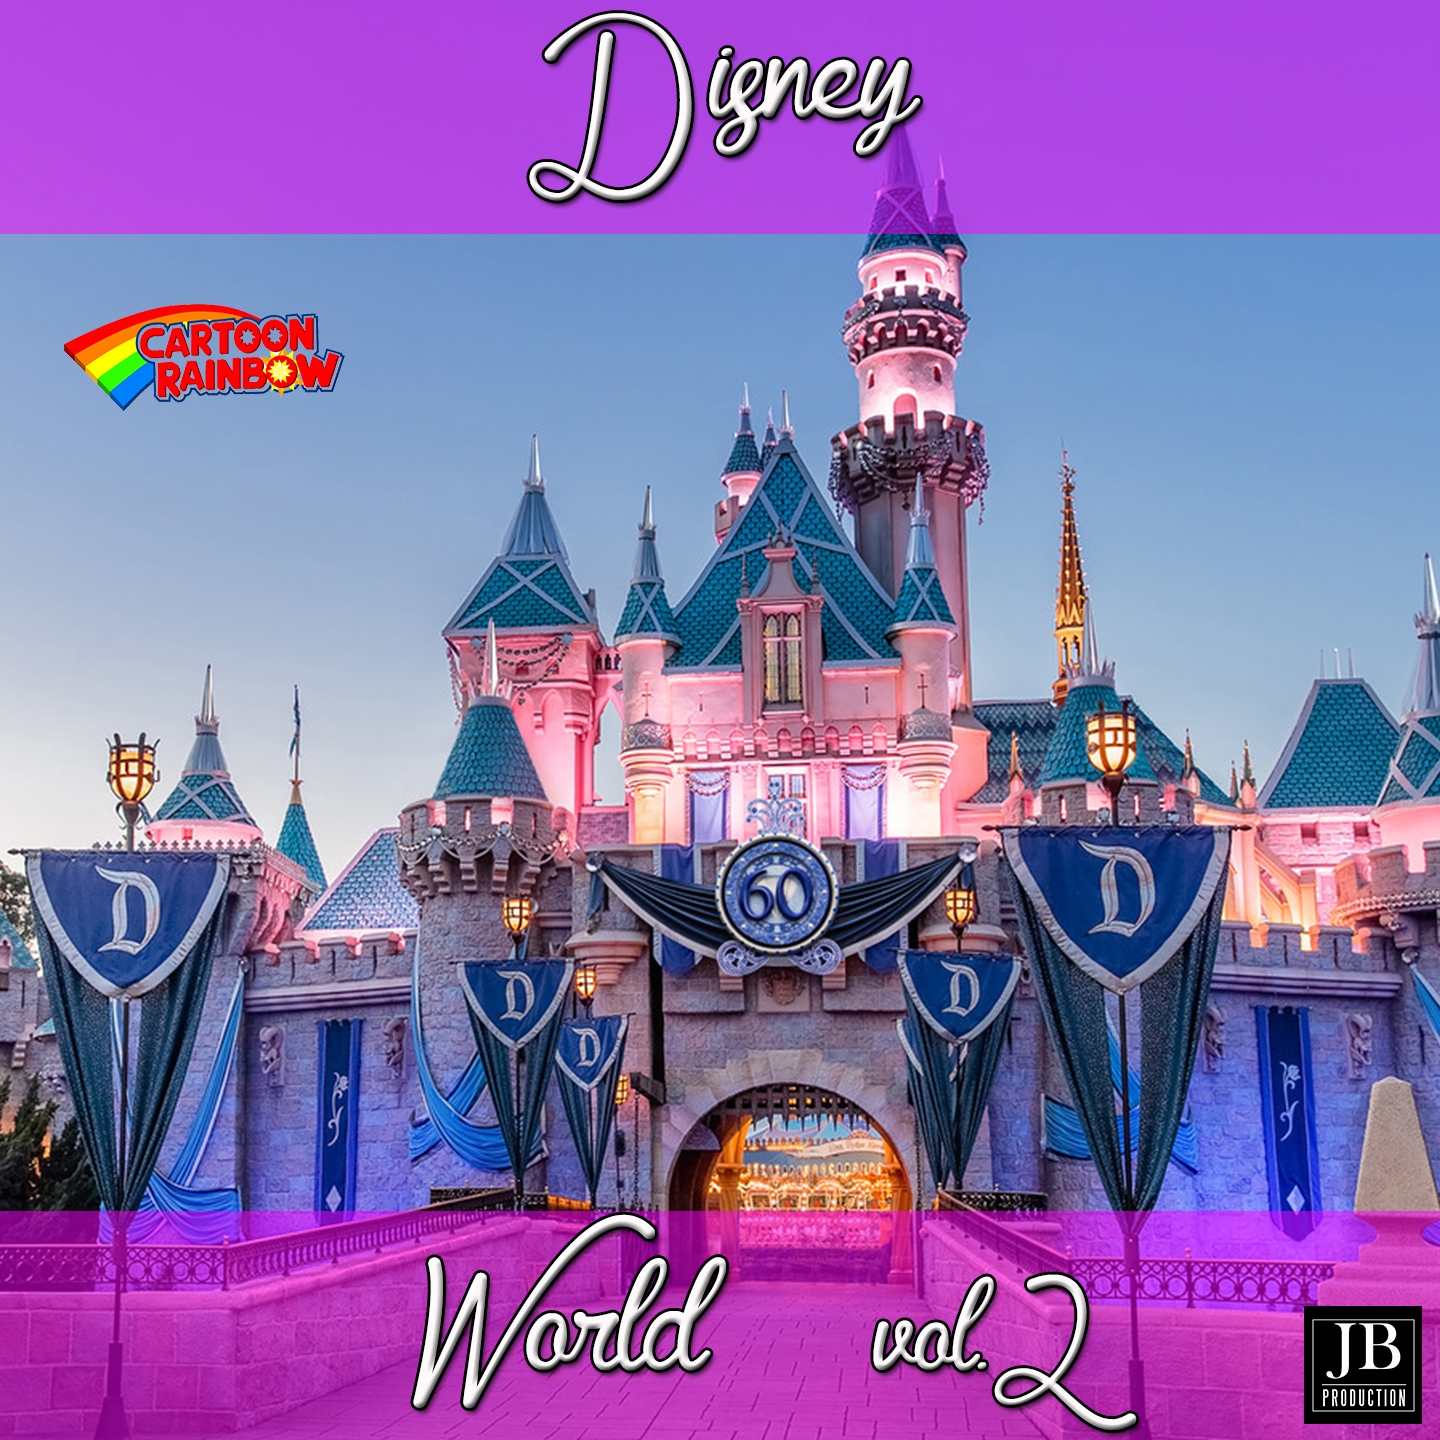 The Disney World 2